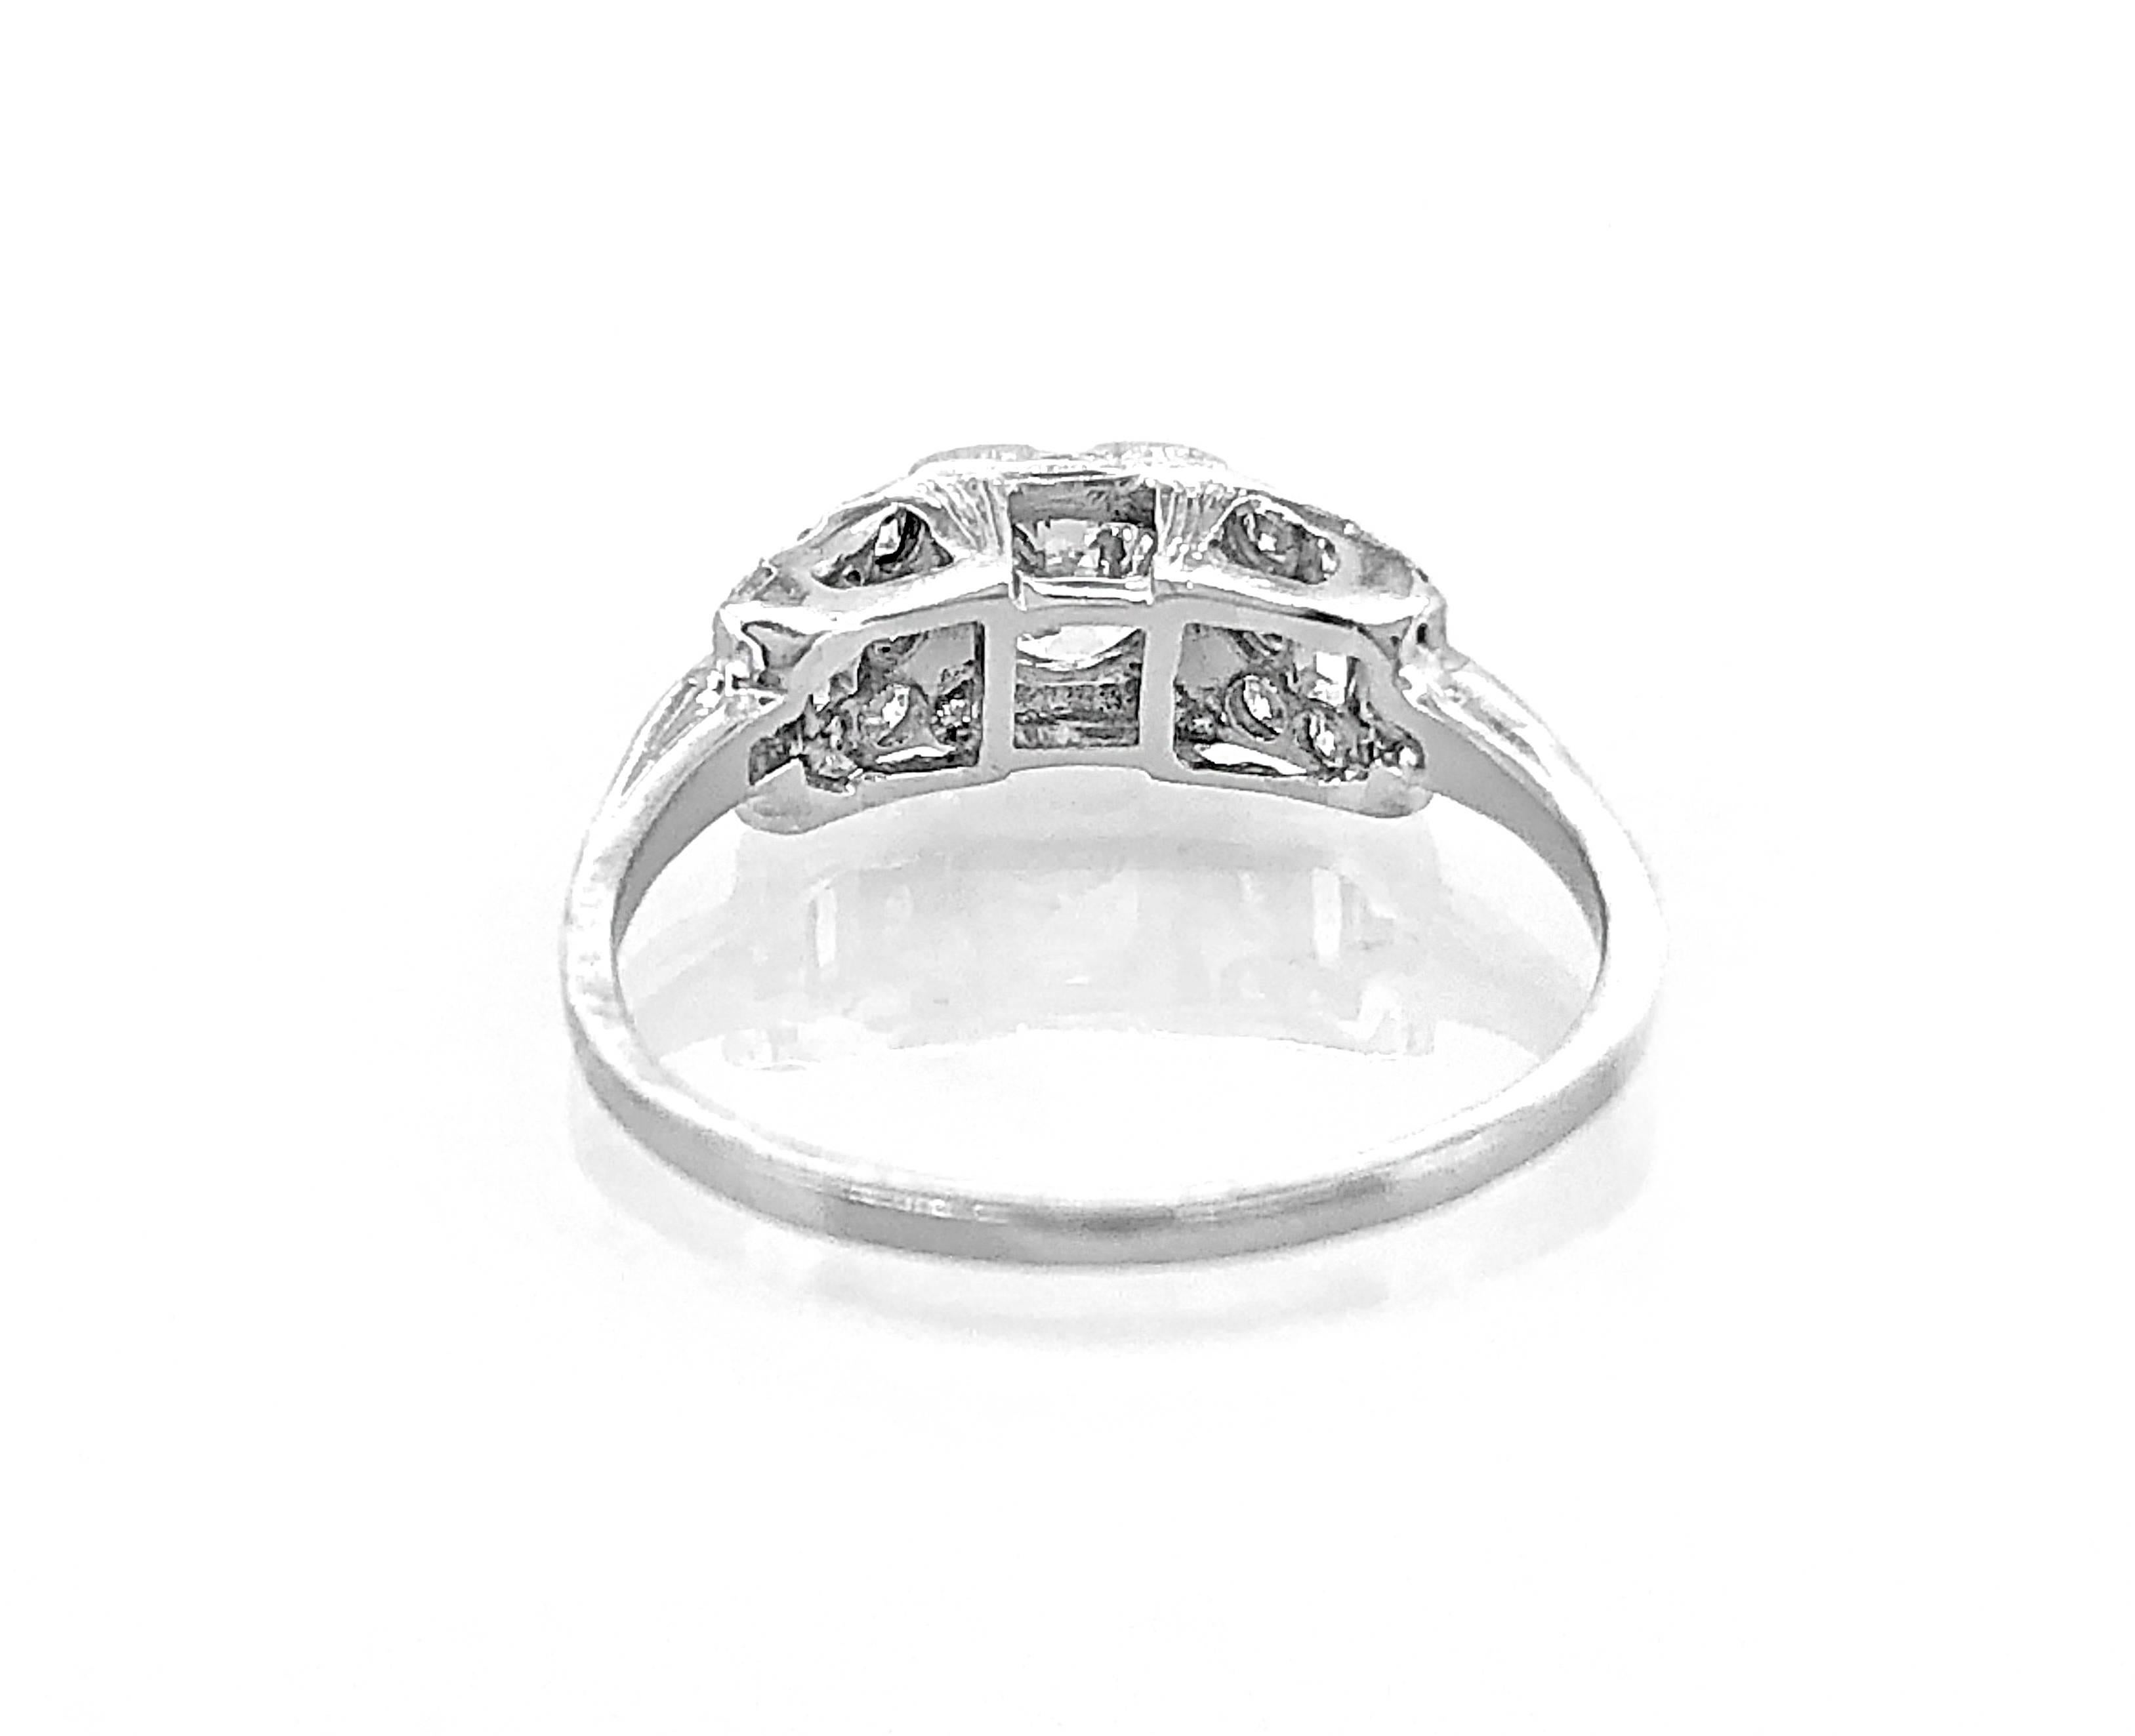 .33 carat diamond ring